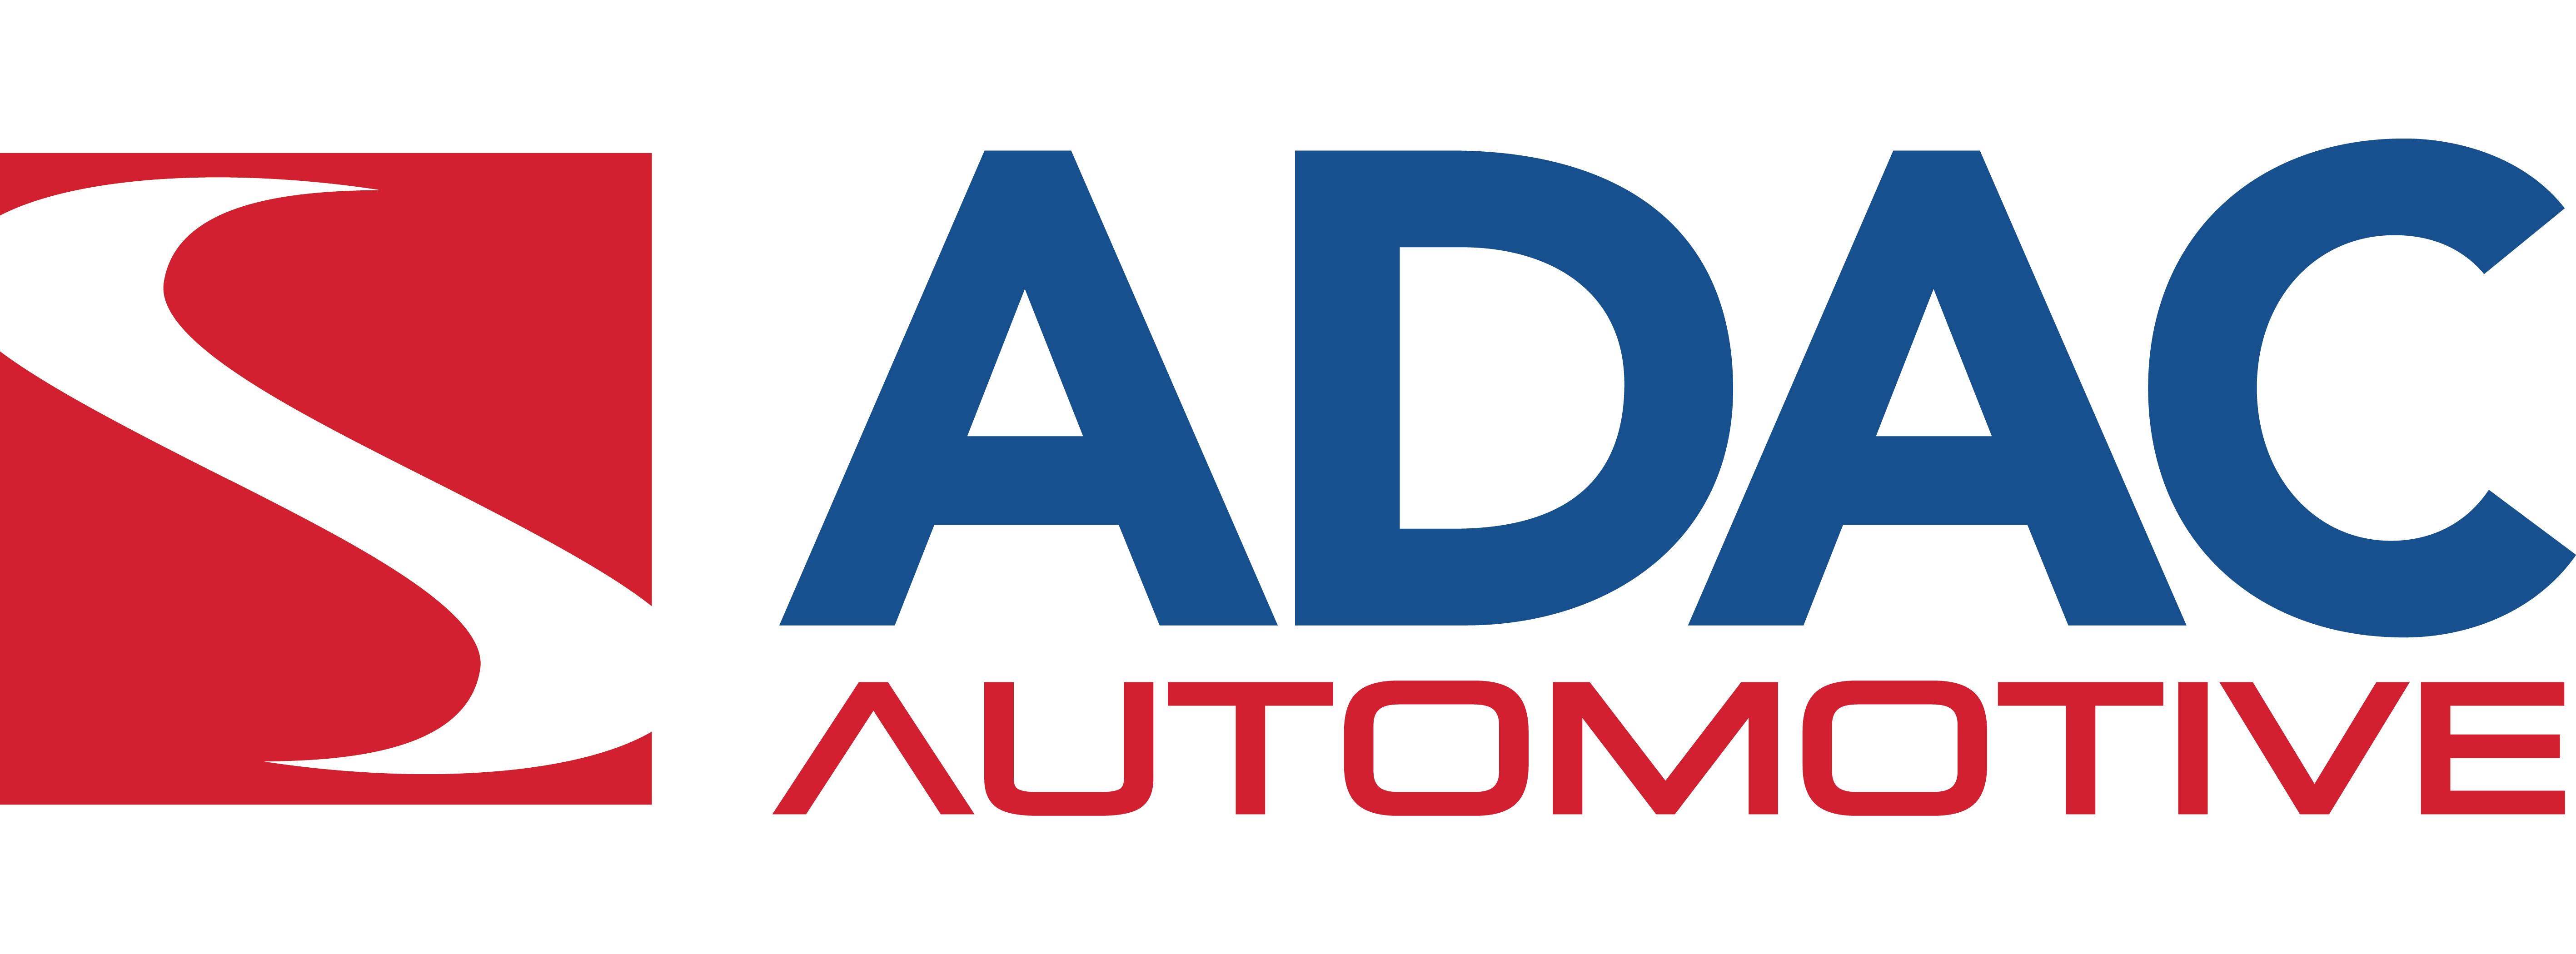 adac logo 4 by Sarah - Logo A